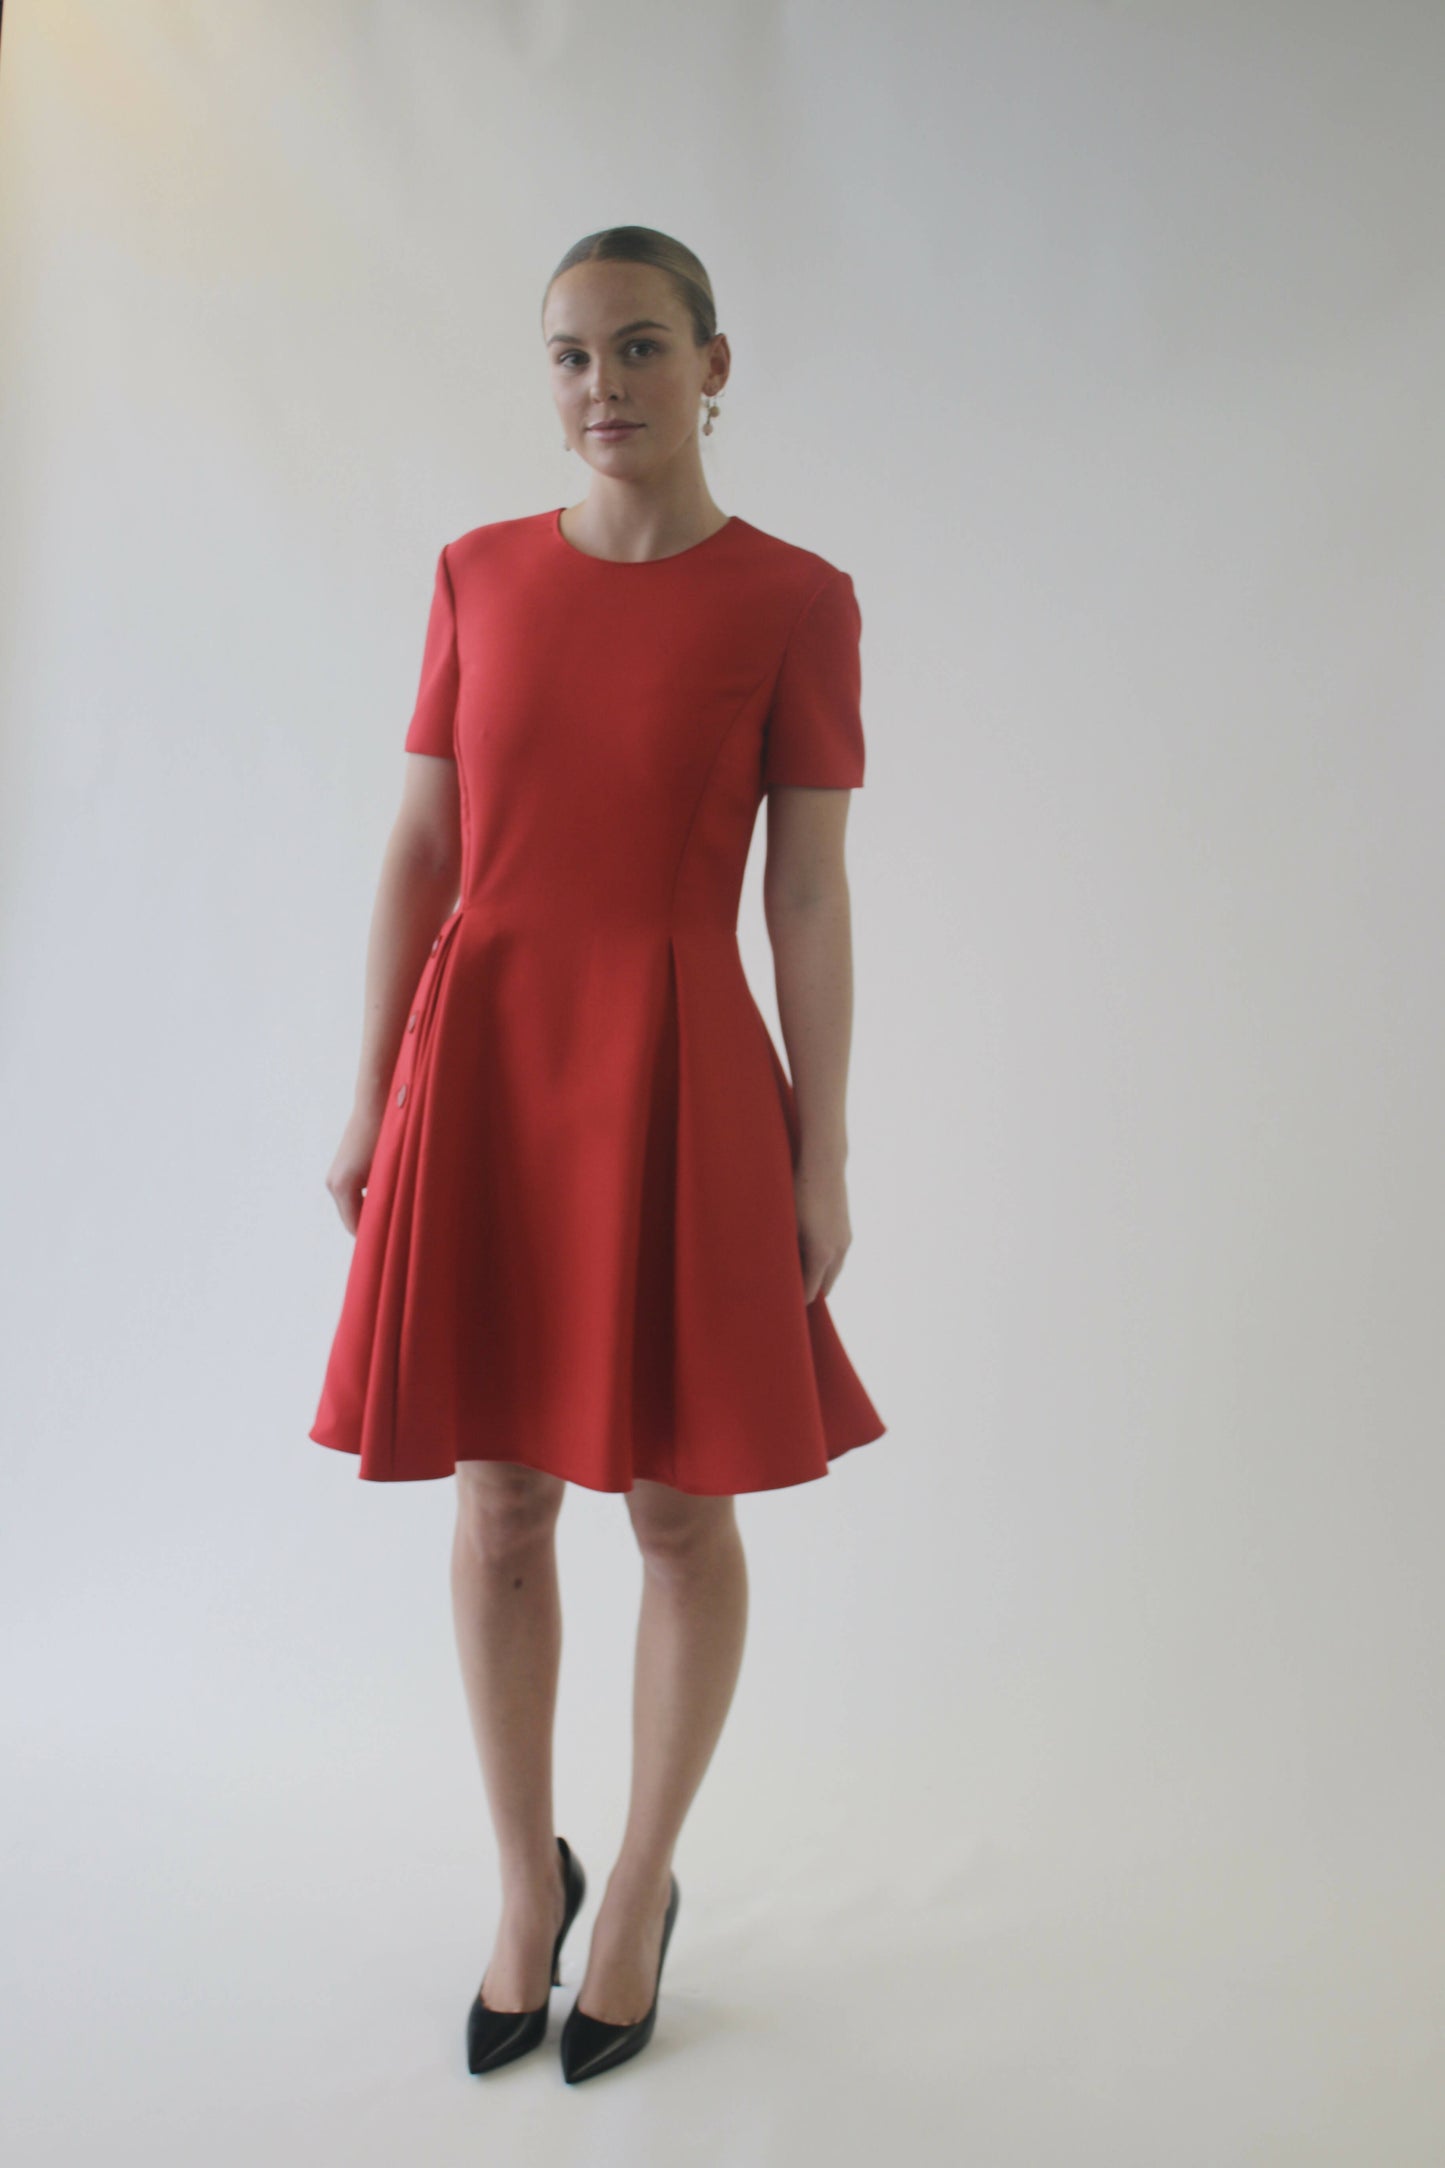 Dior by Raf Simmons dress